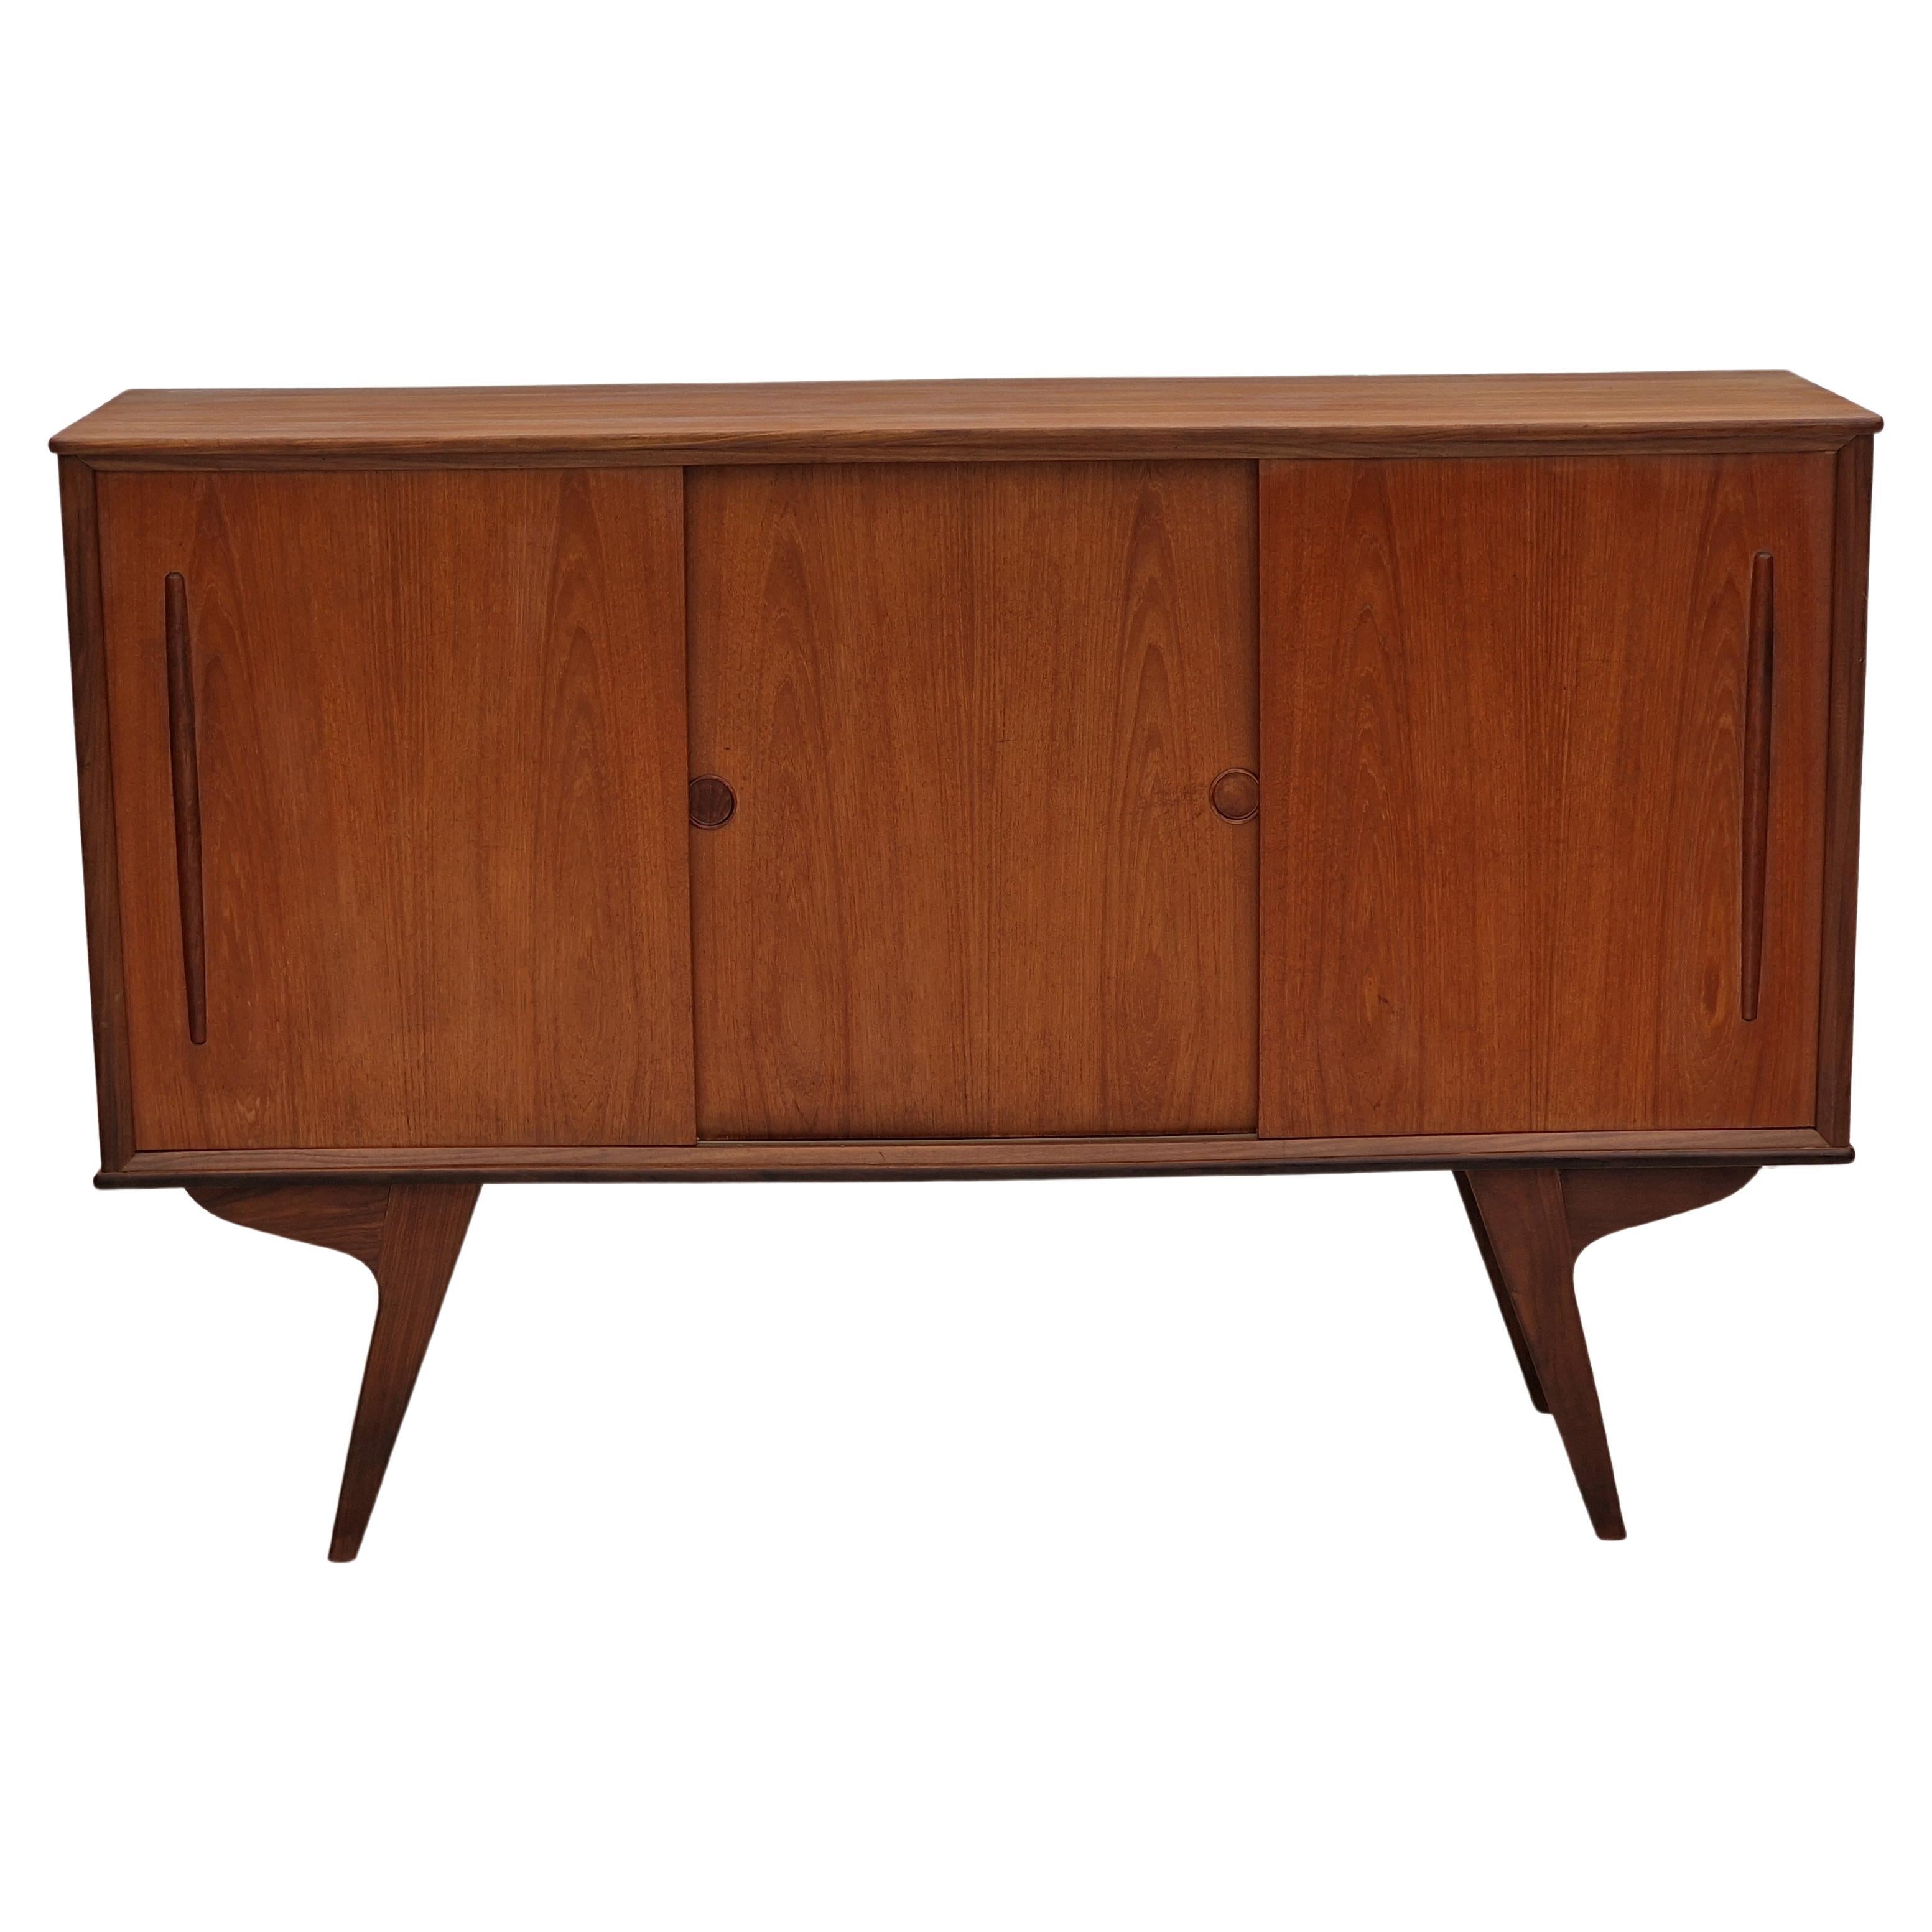 1960s, Vintage Danish Cabinet-Chest, Teak Wood For Sale